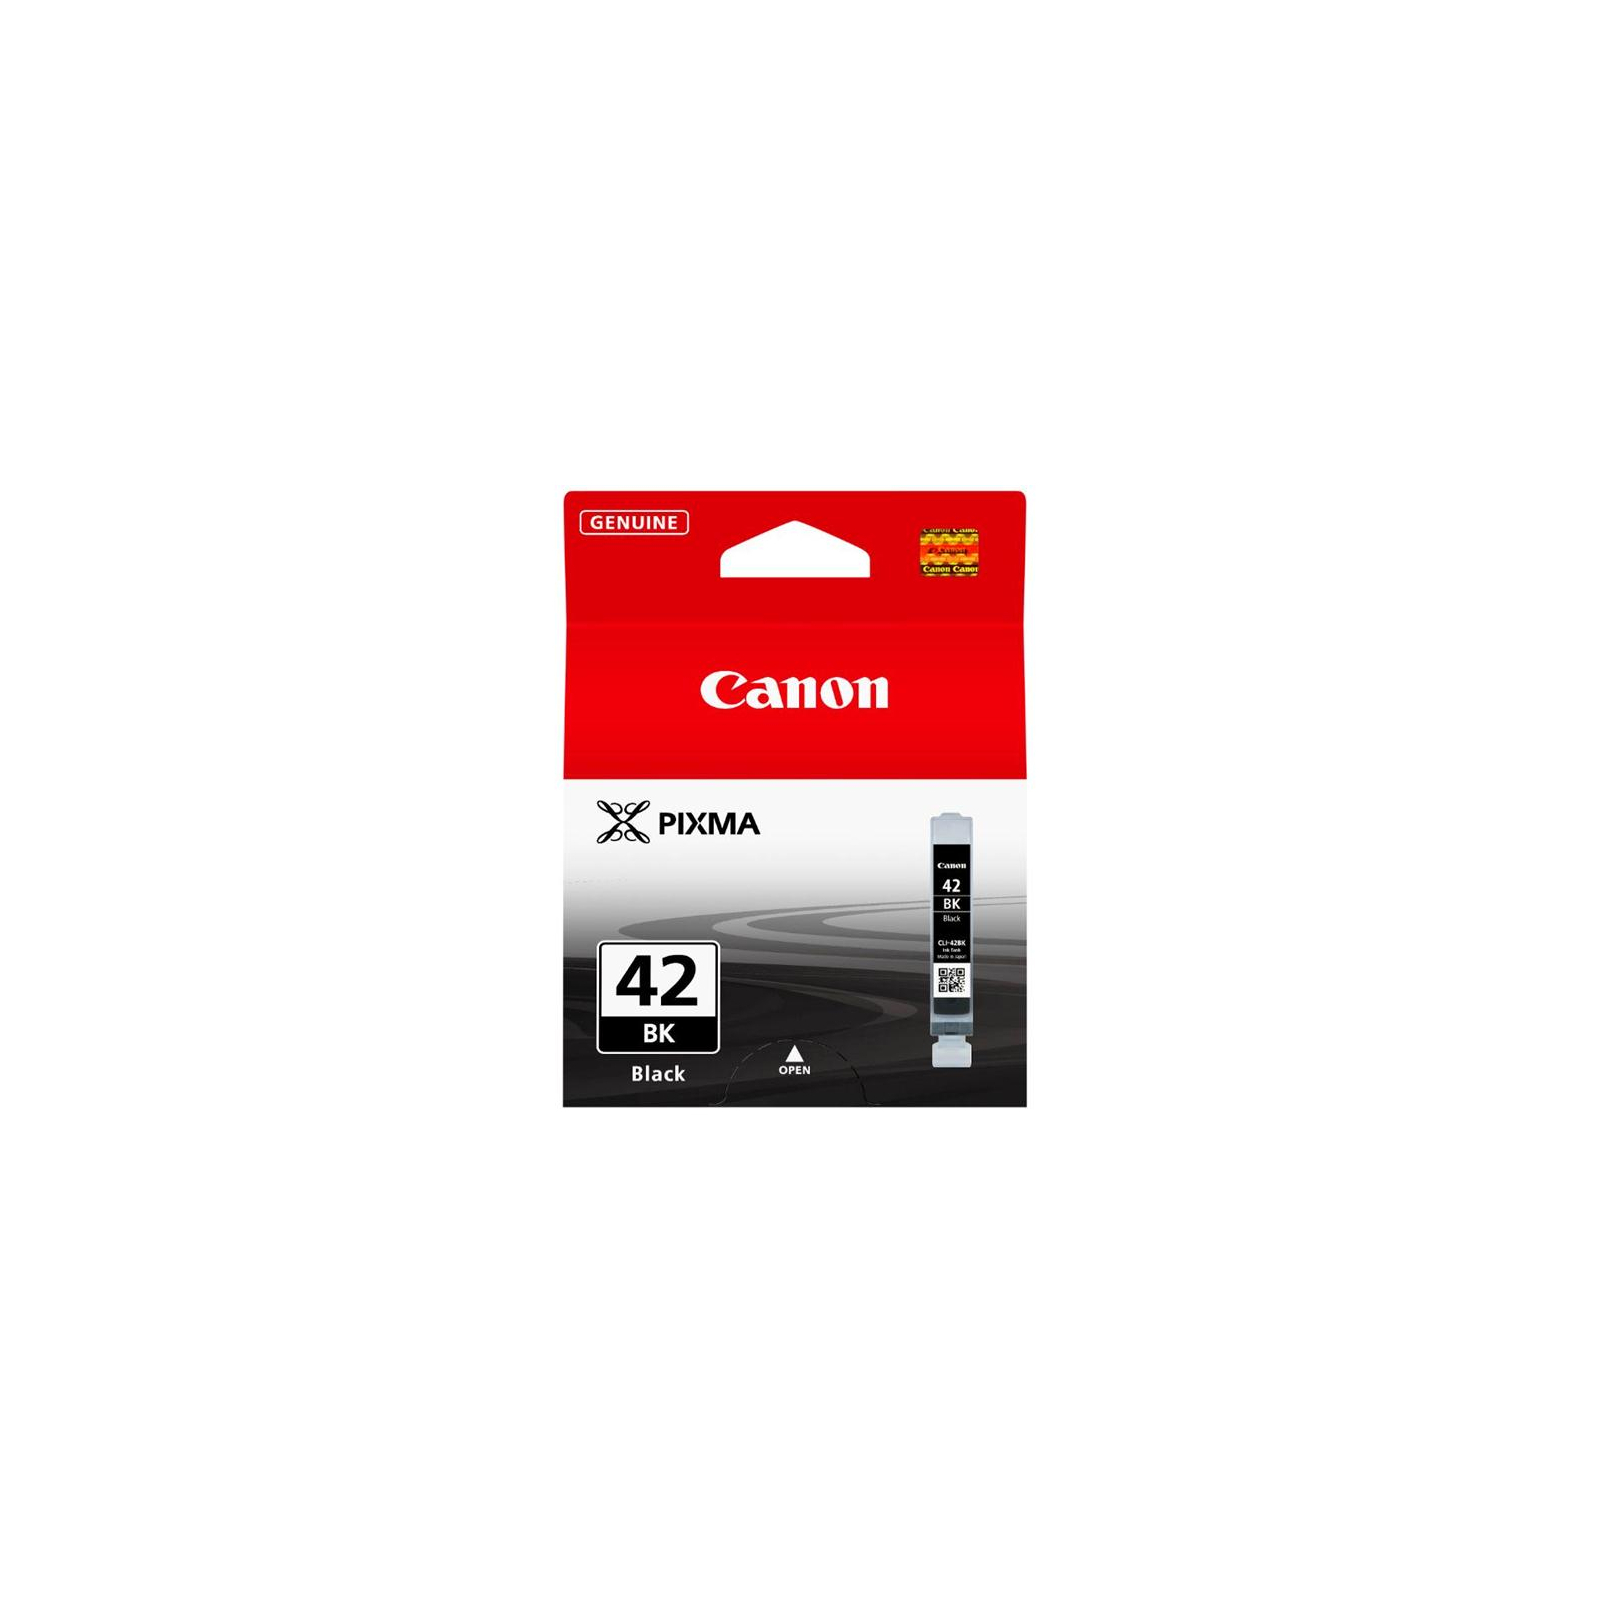 Картридж Canon CLI-42 Cyan для PIXMA PRO-100 (6385B001) изображение 2